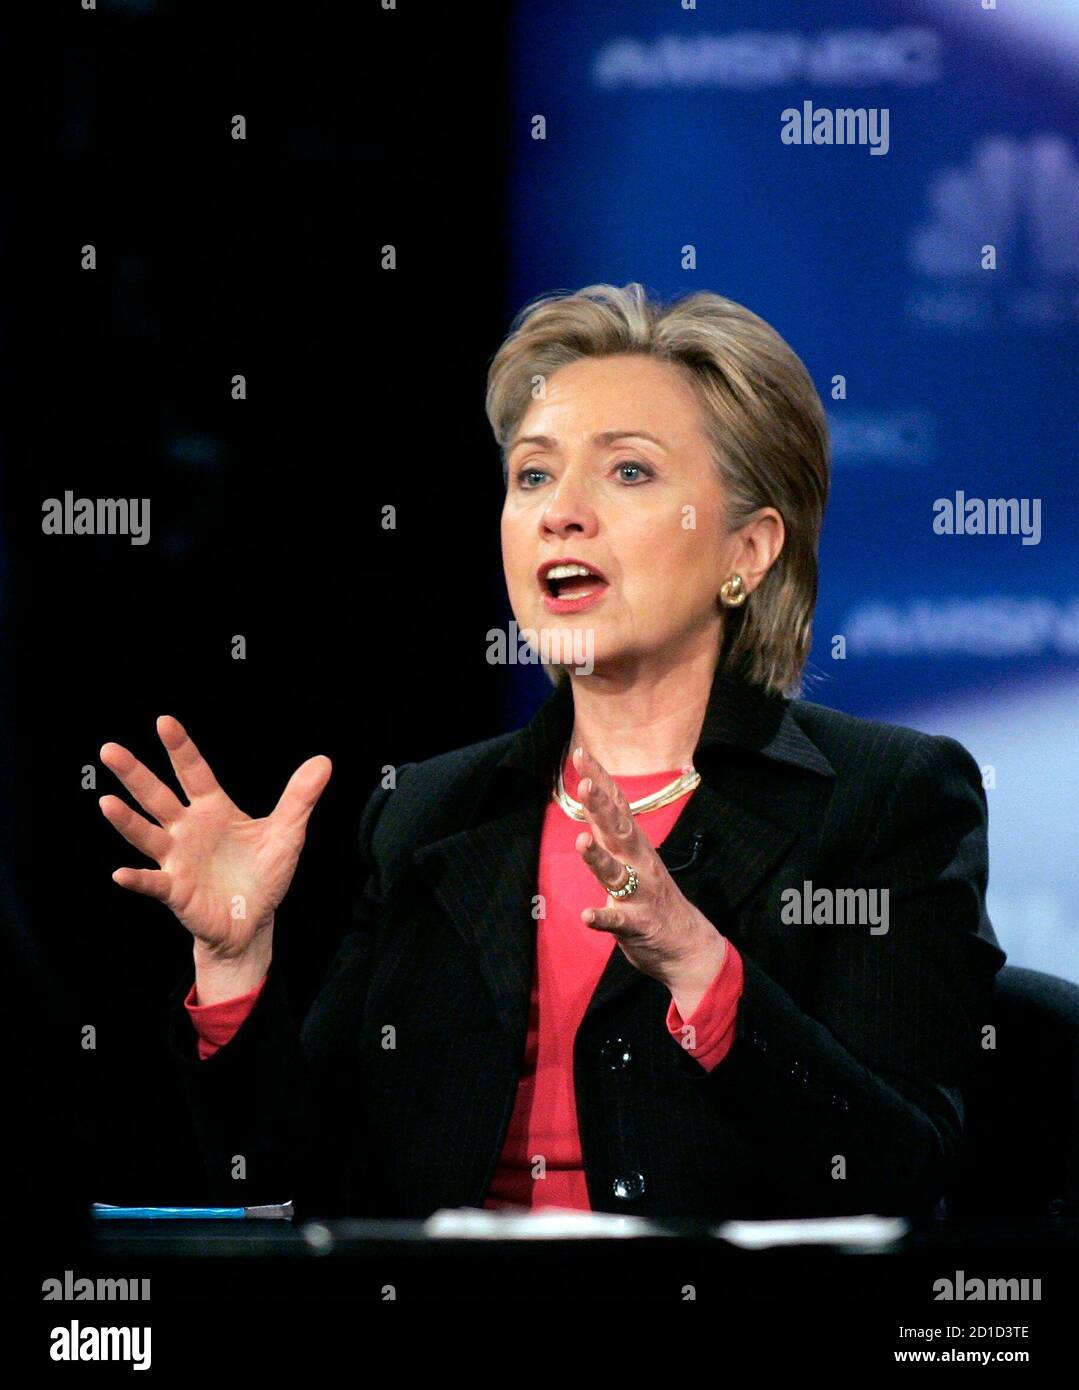 Demokratische Präsidentschaftskandidat Senator Hillary Clinton (D -NY) spricht bei MSNBC/Nevada demokratische Partei Präsidentschaftskandidaten in Las Vegas, 15. Januar 2008 debattieren REUTERS/Steve Marcus (UNITED STATES), US Präsidentschaftswahlen Kampagne 2008 (USA) Stockfoto